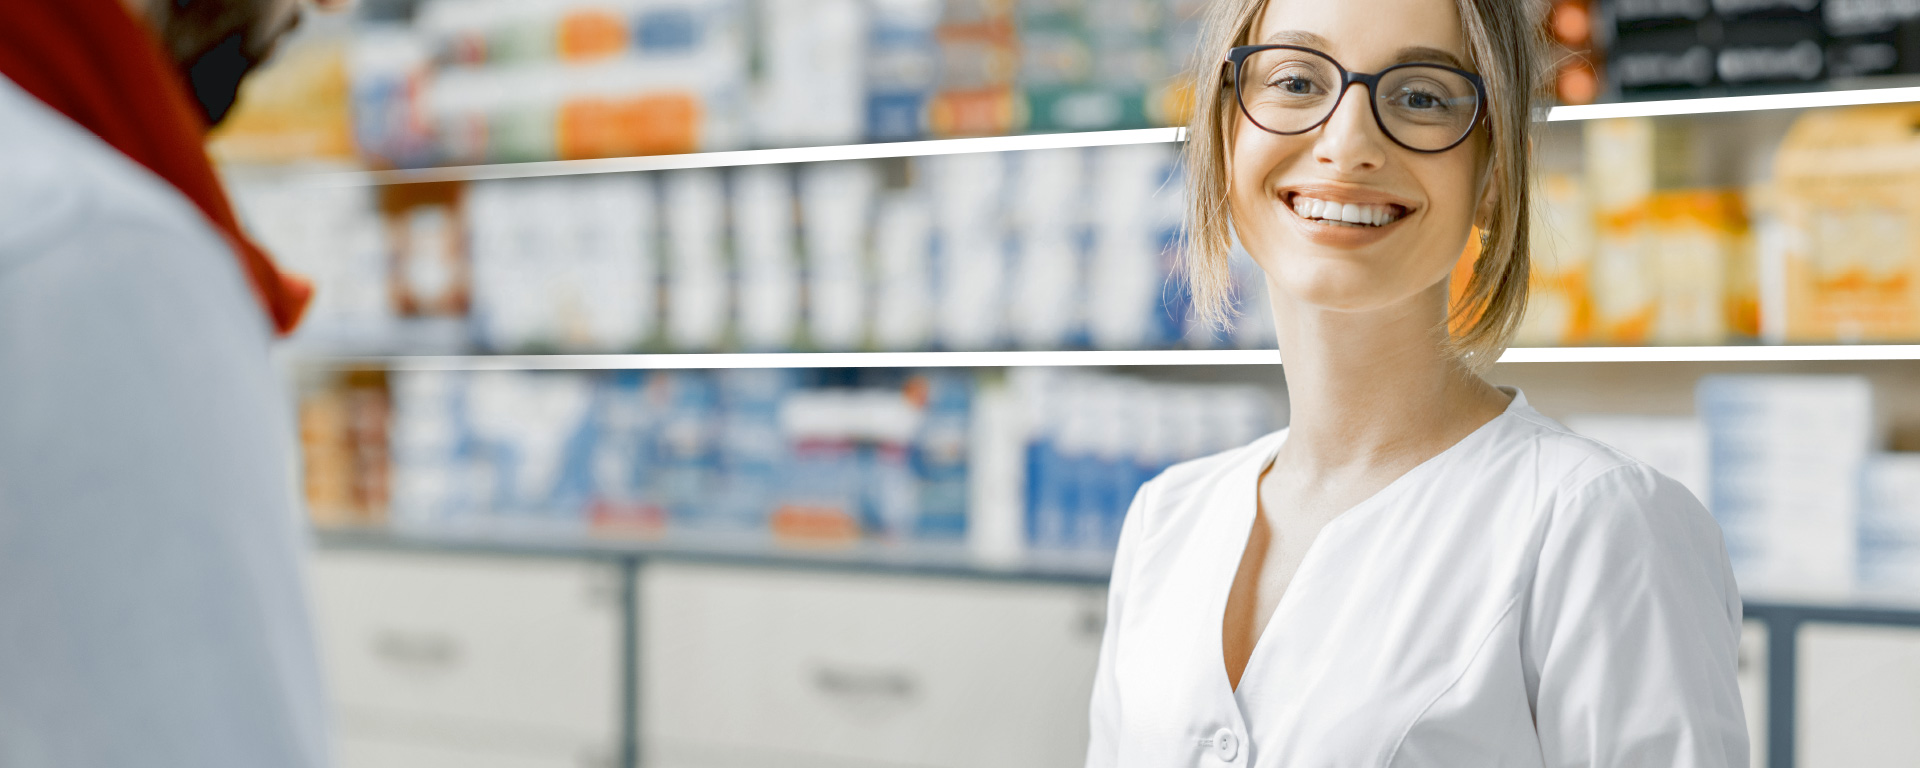 Managing hazardous substances from laboratories and pharmacies